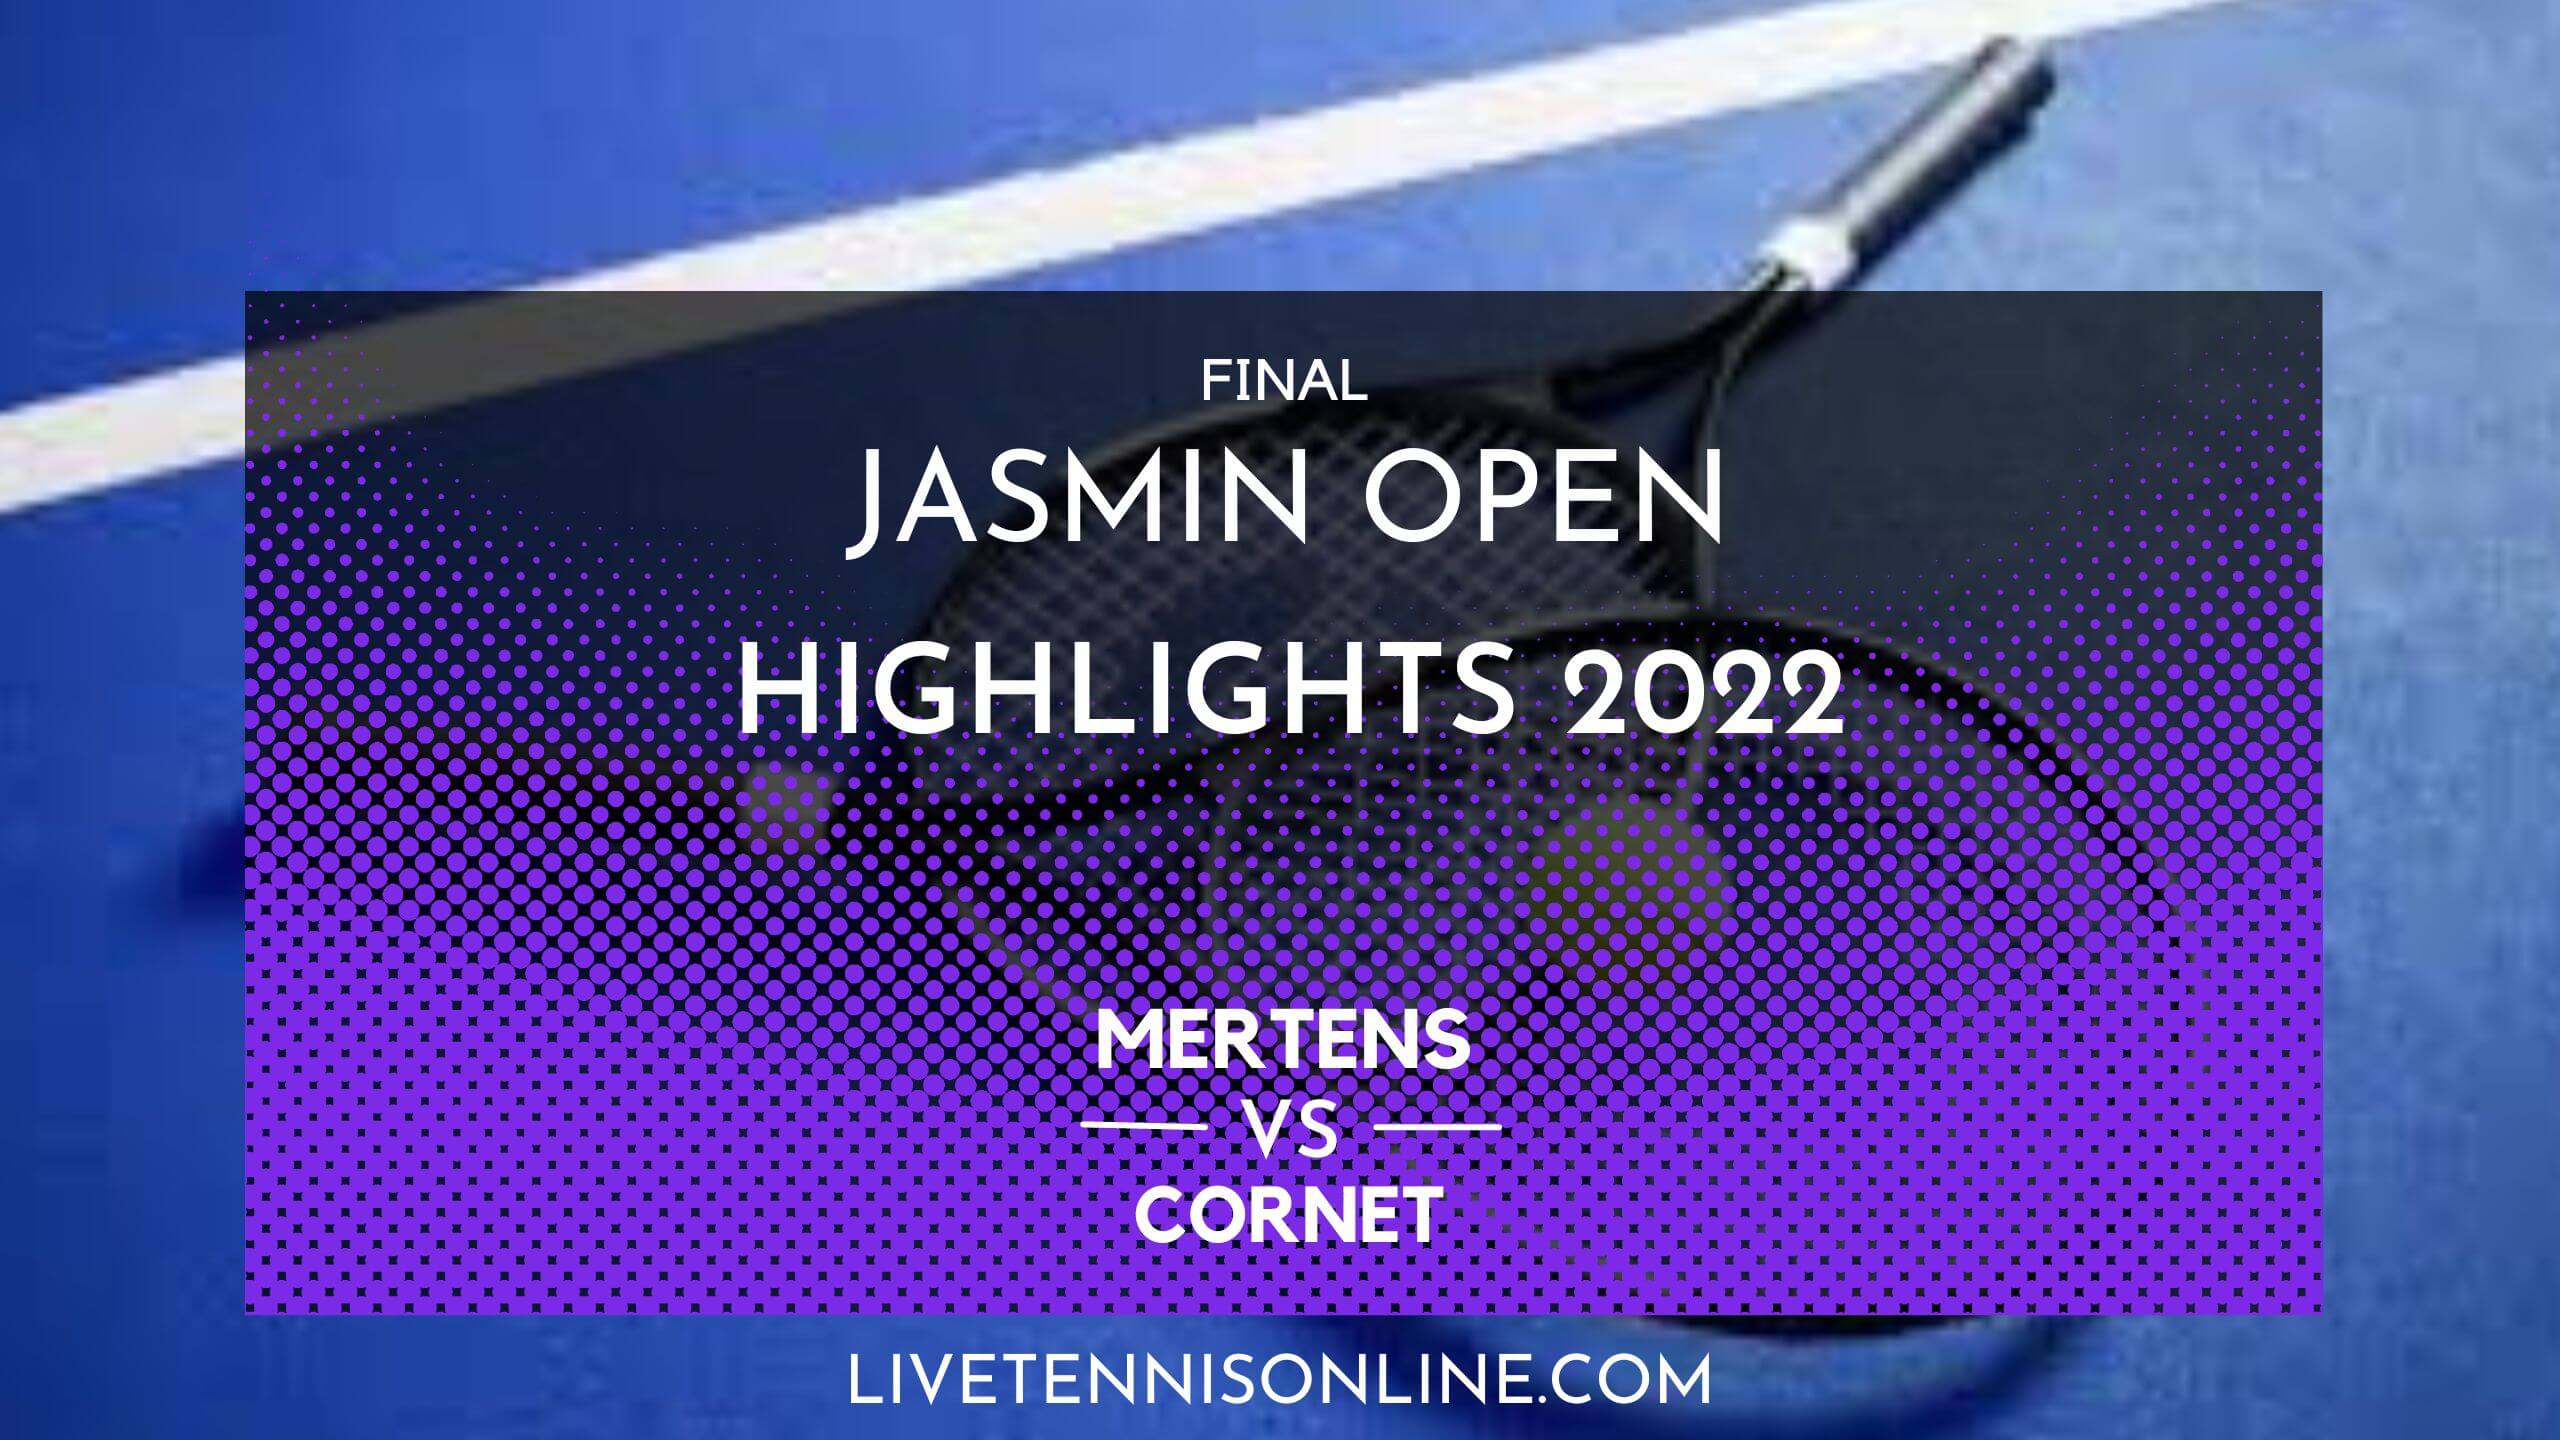 Mertens Vs Cornet Final Highlights 2022 Jasmin Open